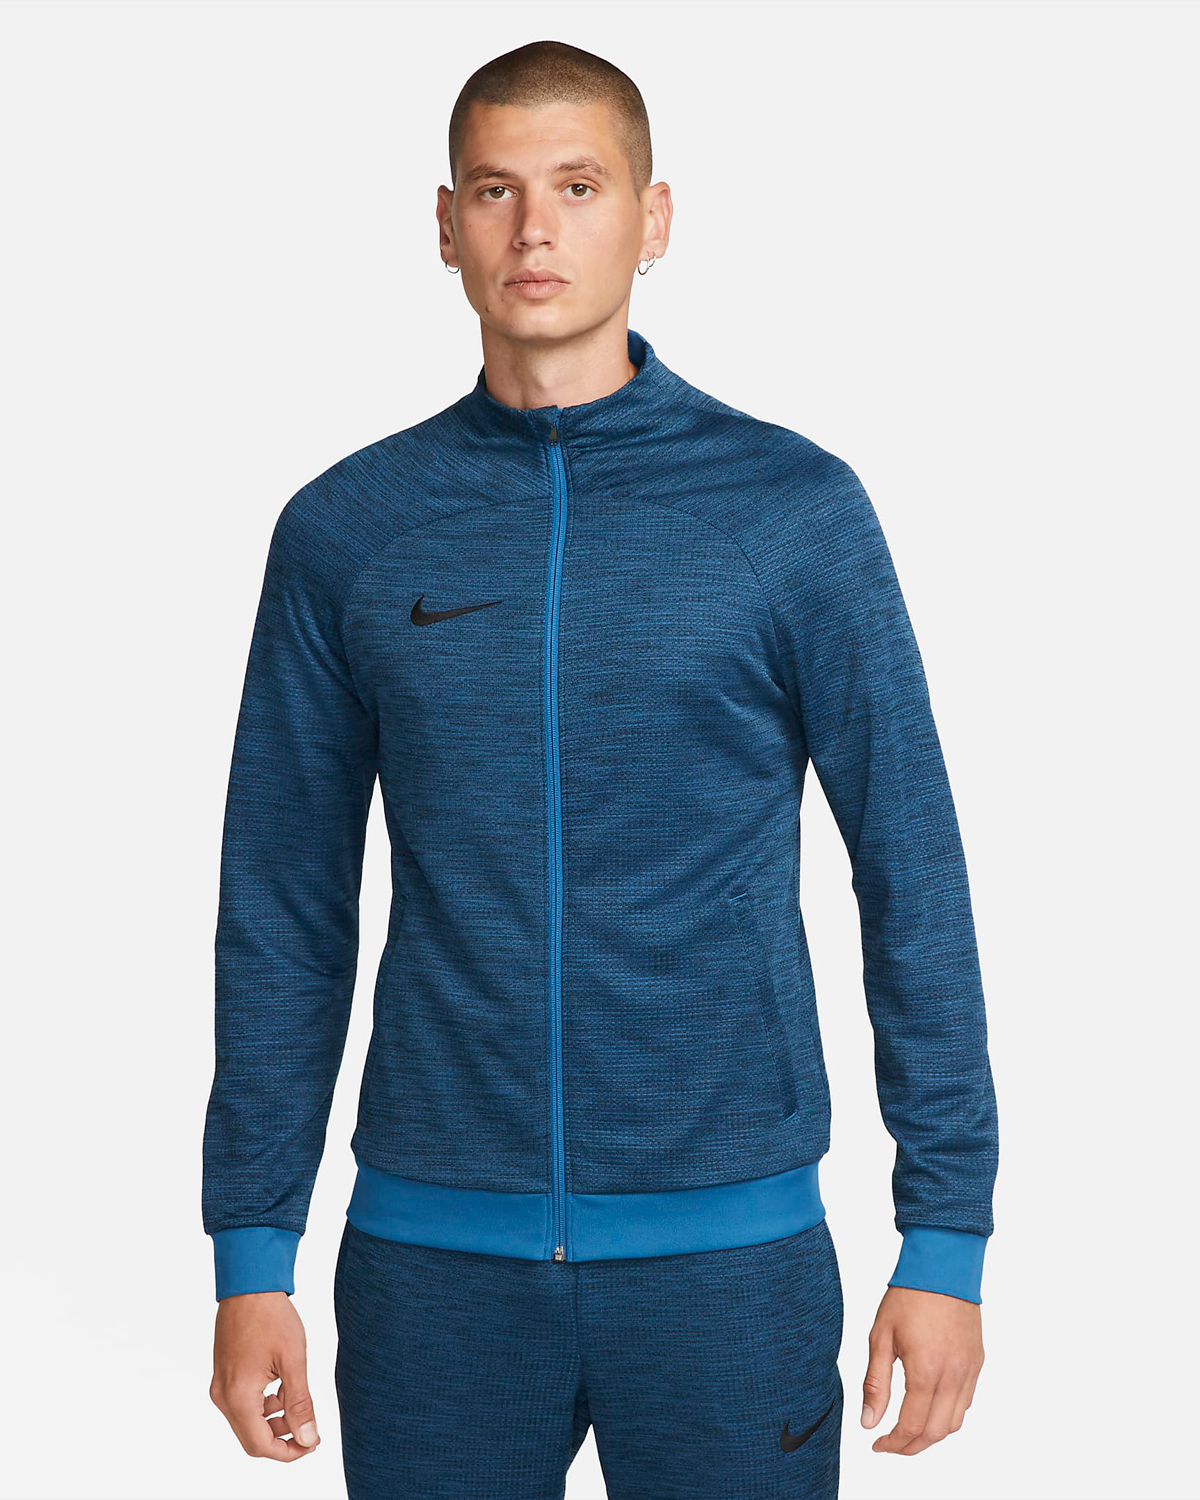 Nike-Academy-Jacket-Industrial-Blue-Black